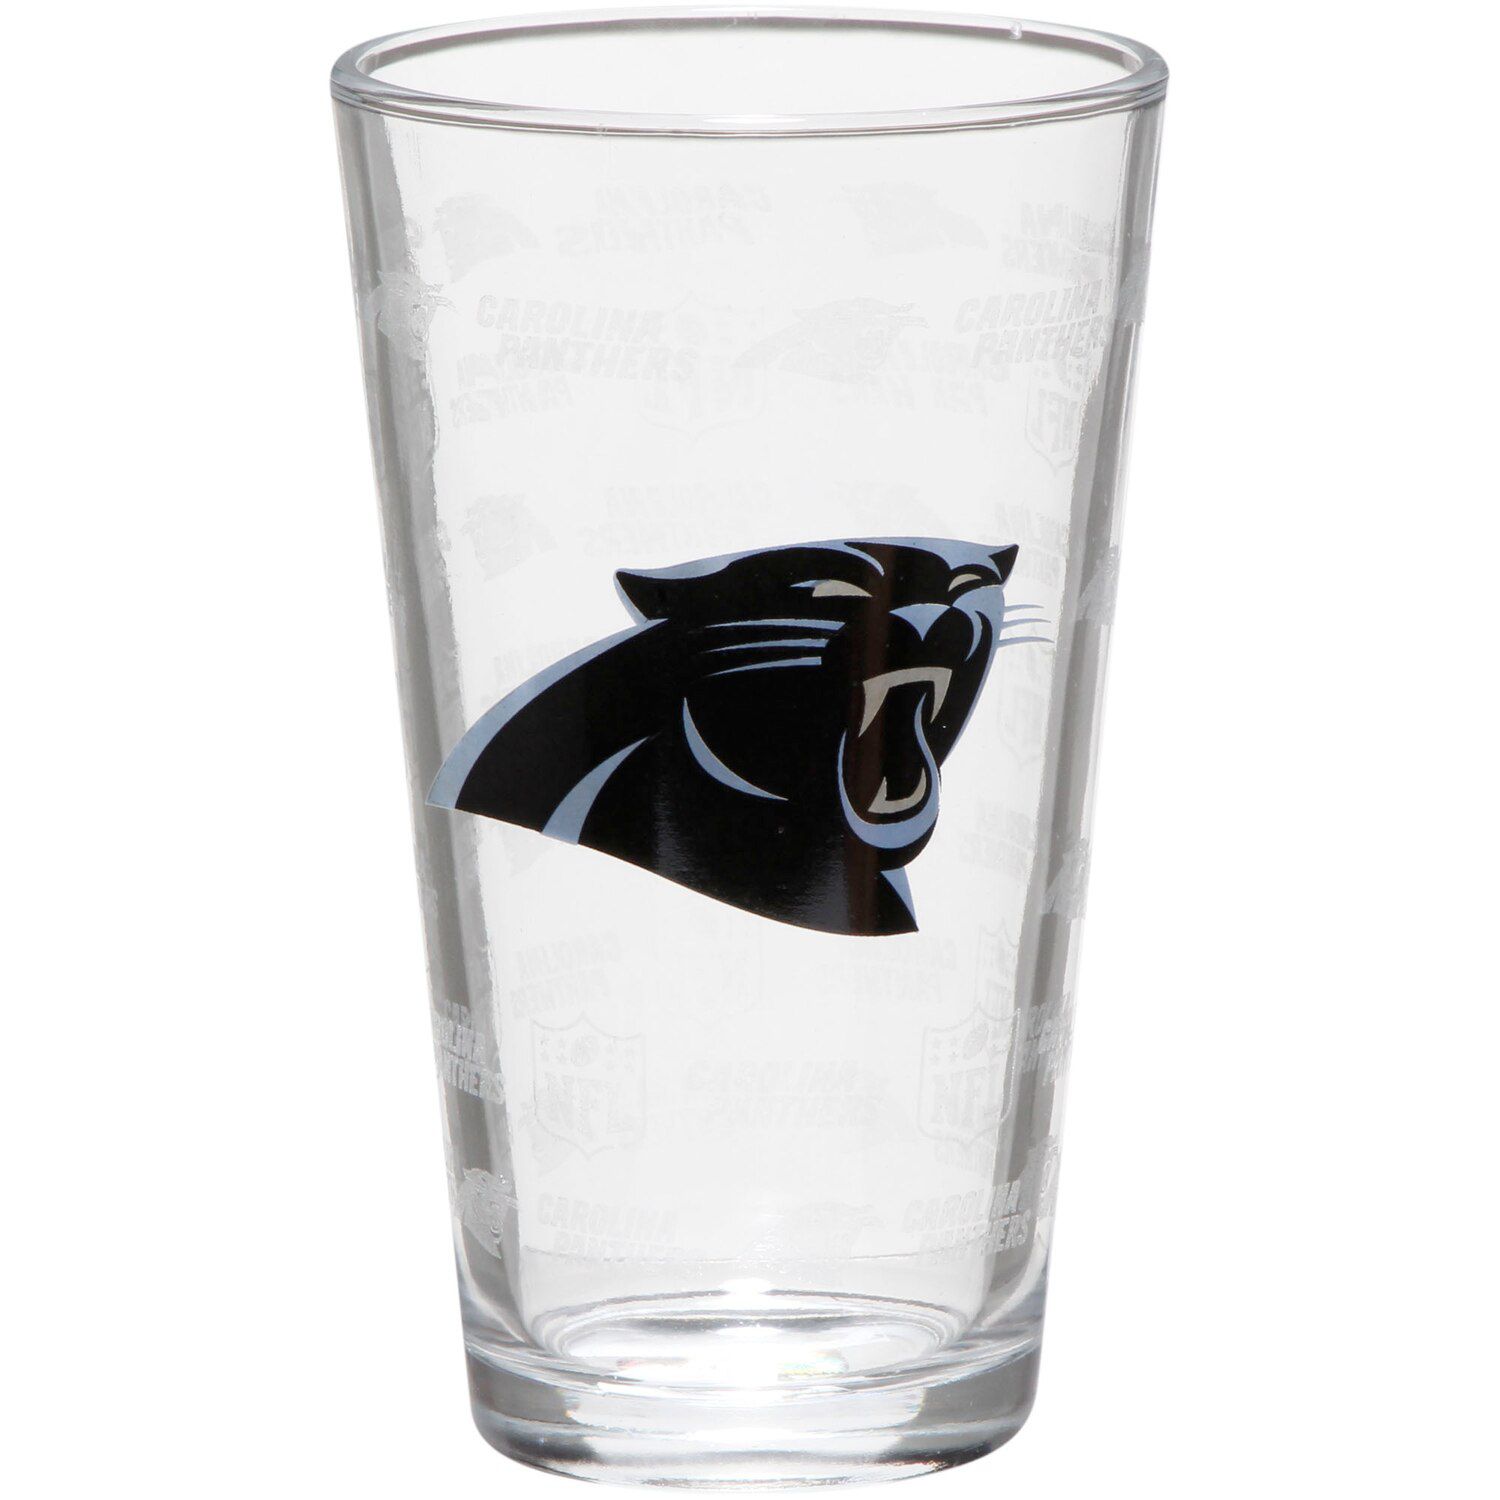 Image for Unbranded Carolina Panthers 16oz. Sandblasted Mixing Glass at Kohl's.